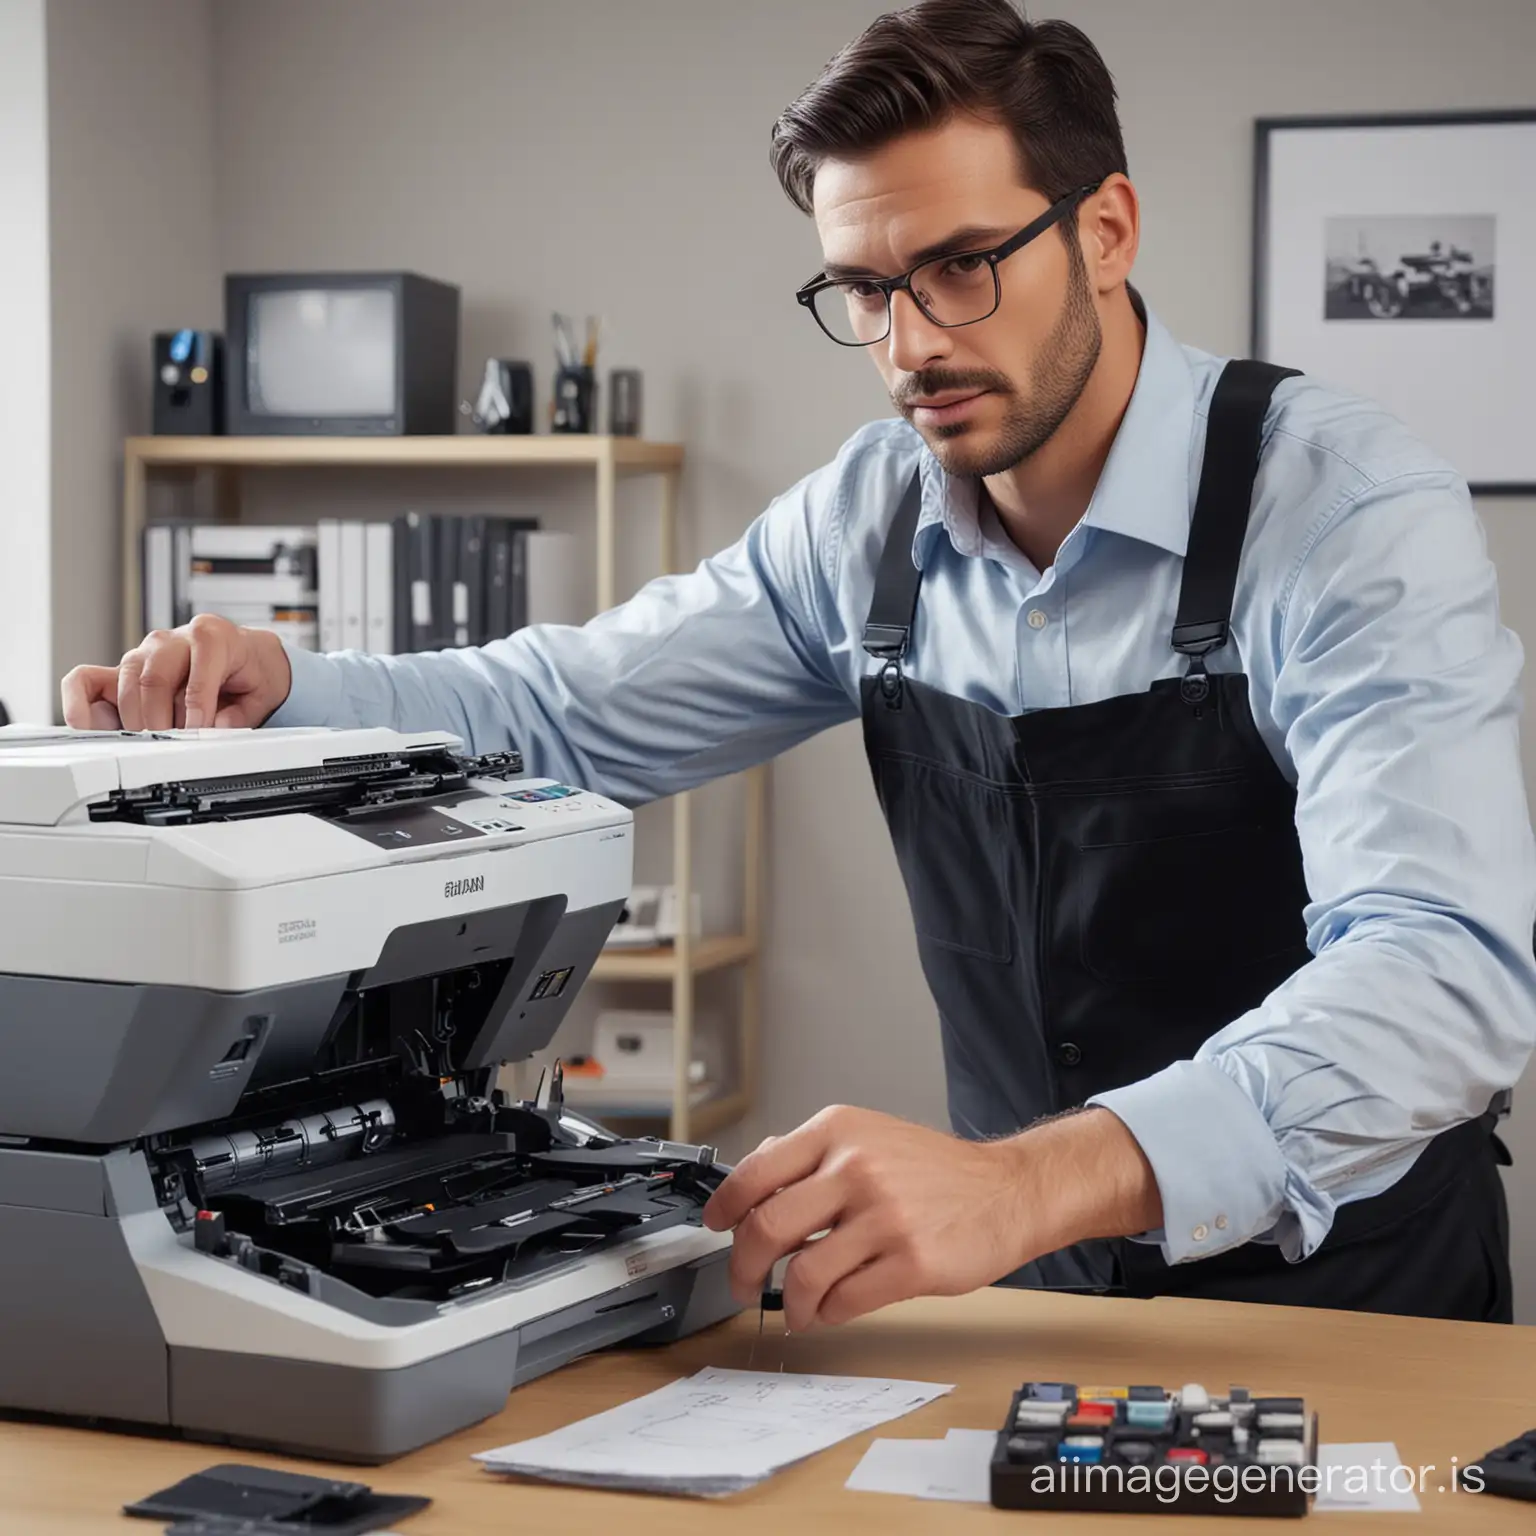 UltraRealistic-Cool-Engineer-Successfully-Repairs-Office-Printer-in-4K